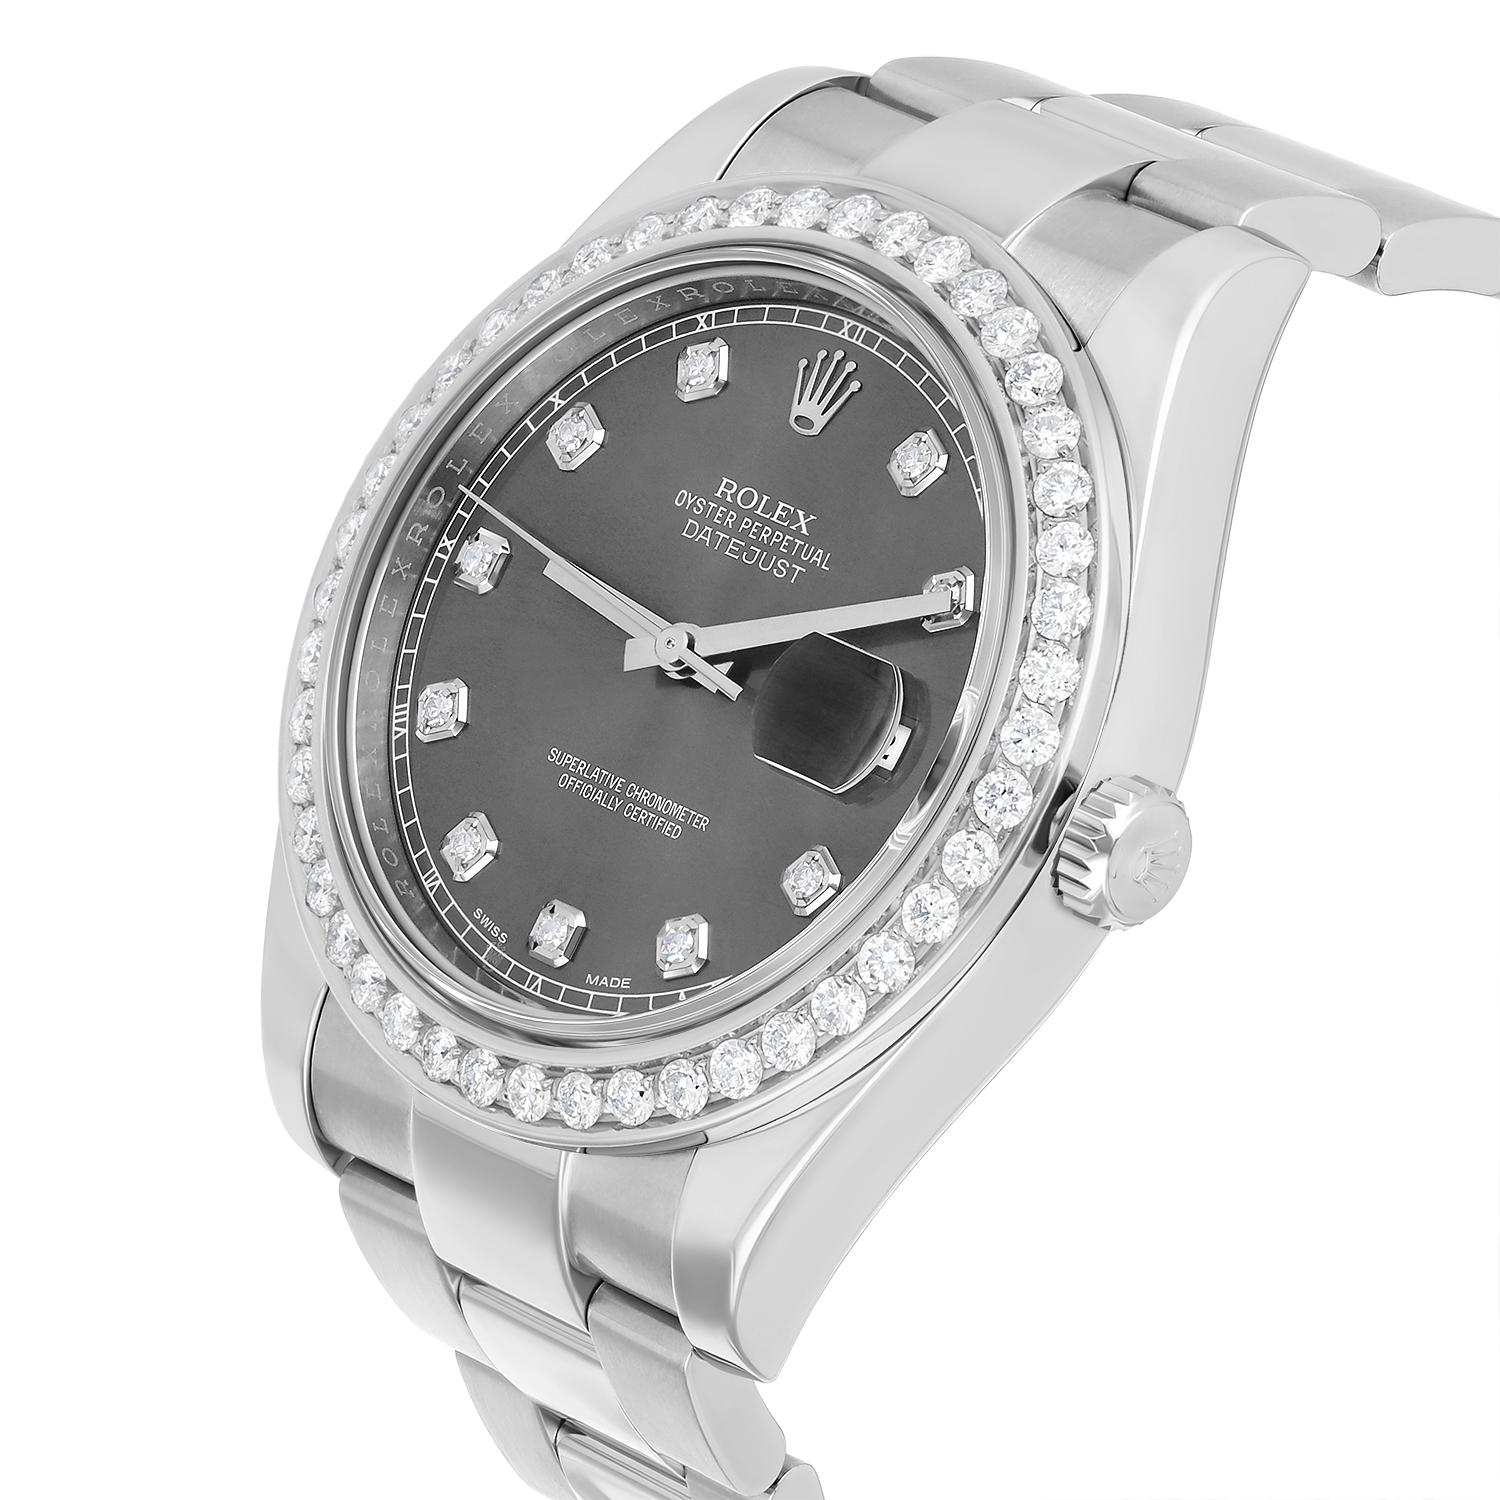 Rolex Datejust II 41mm Steel/18k WG Rhodium Diamond Dial Watch Oyster 116334 For Sale 1